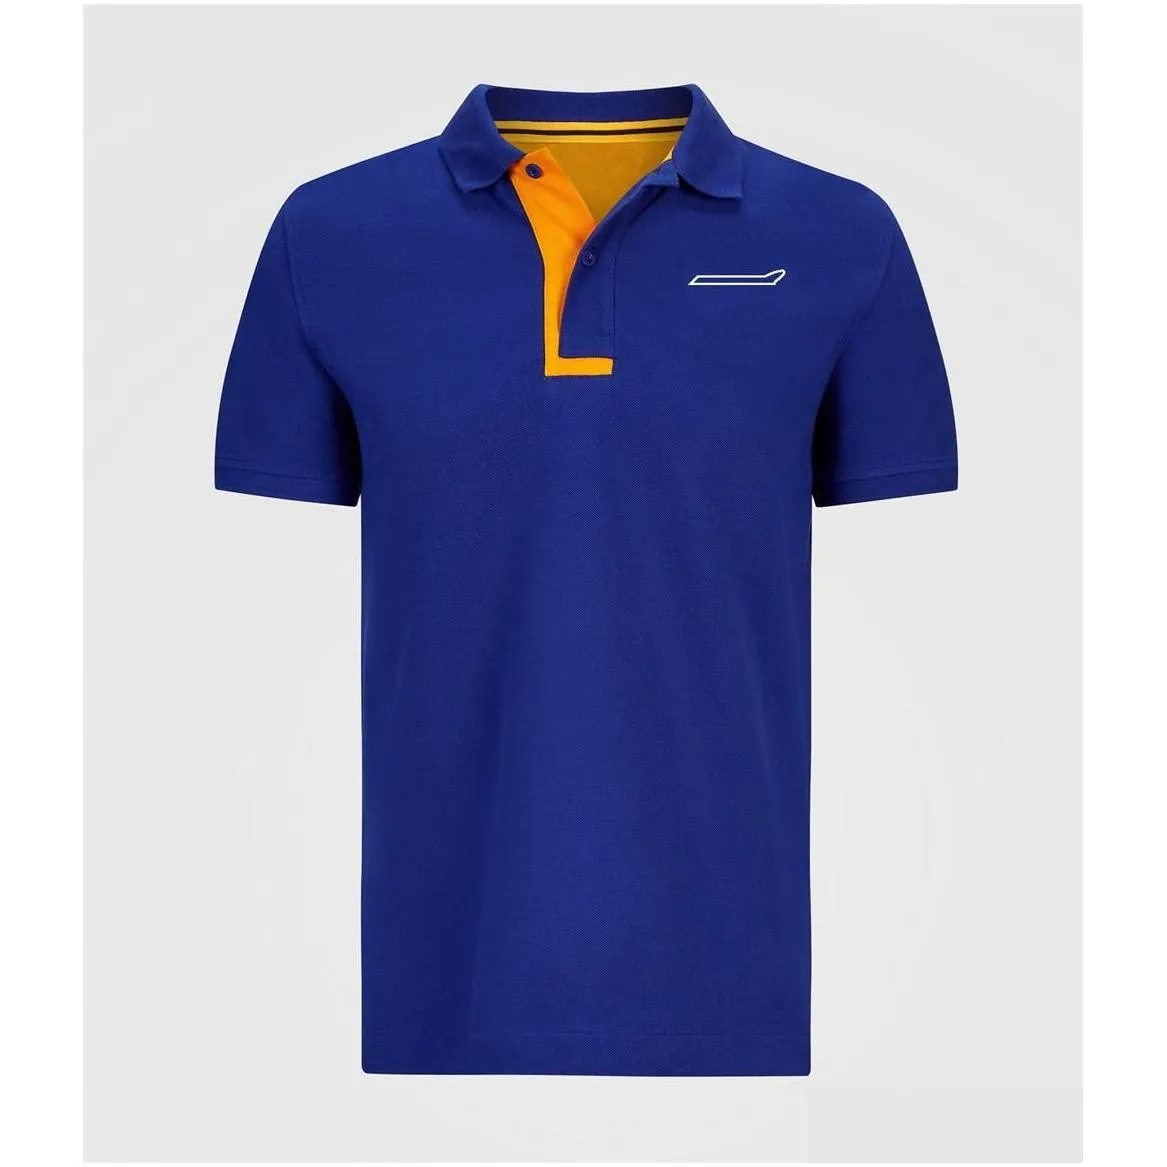 f1 racing polo shirt team uniform car fan series racing suit short-sleeved lapel custom quick-drying short-sleeved t-shirt